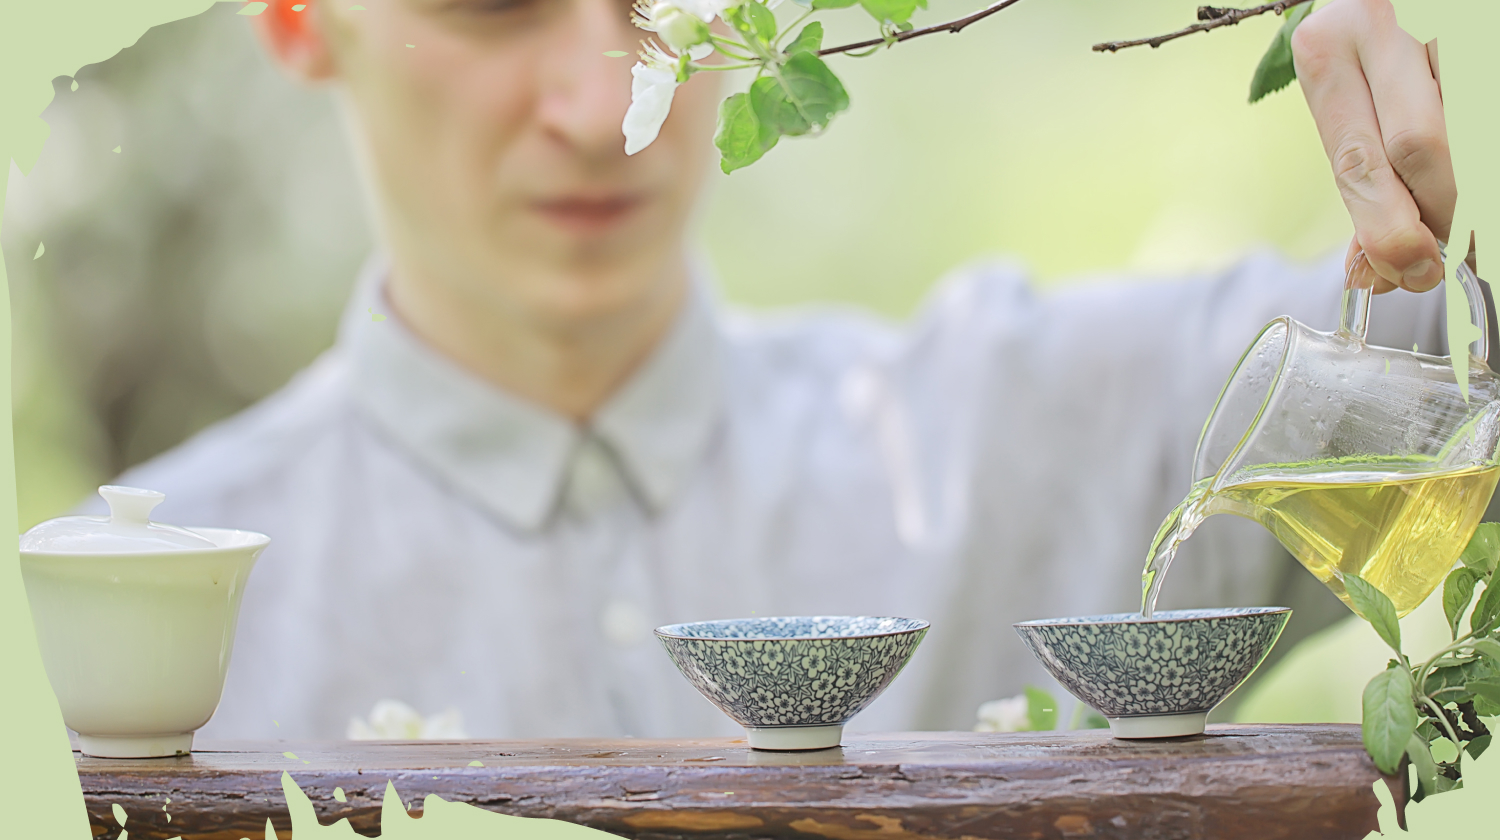 Scientific-Based Health Benefits Of Green Tea